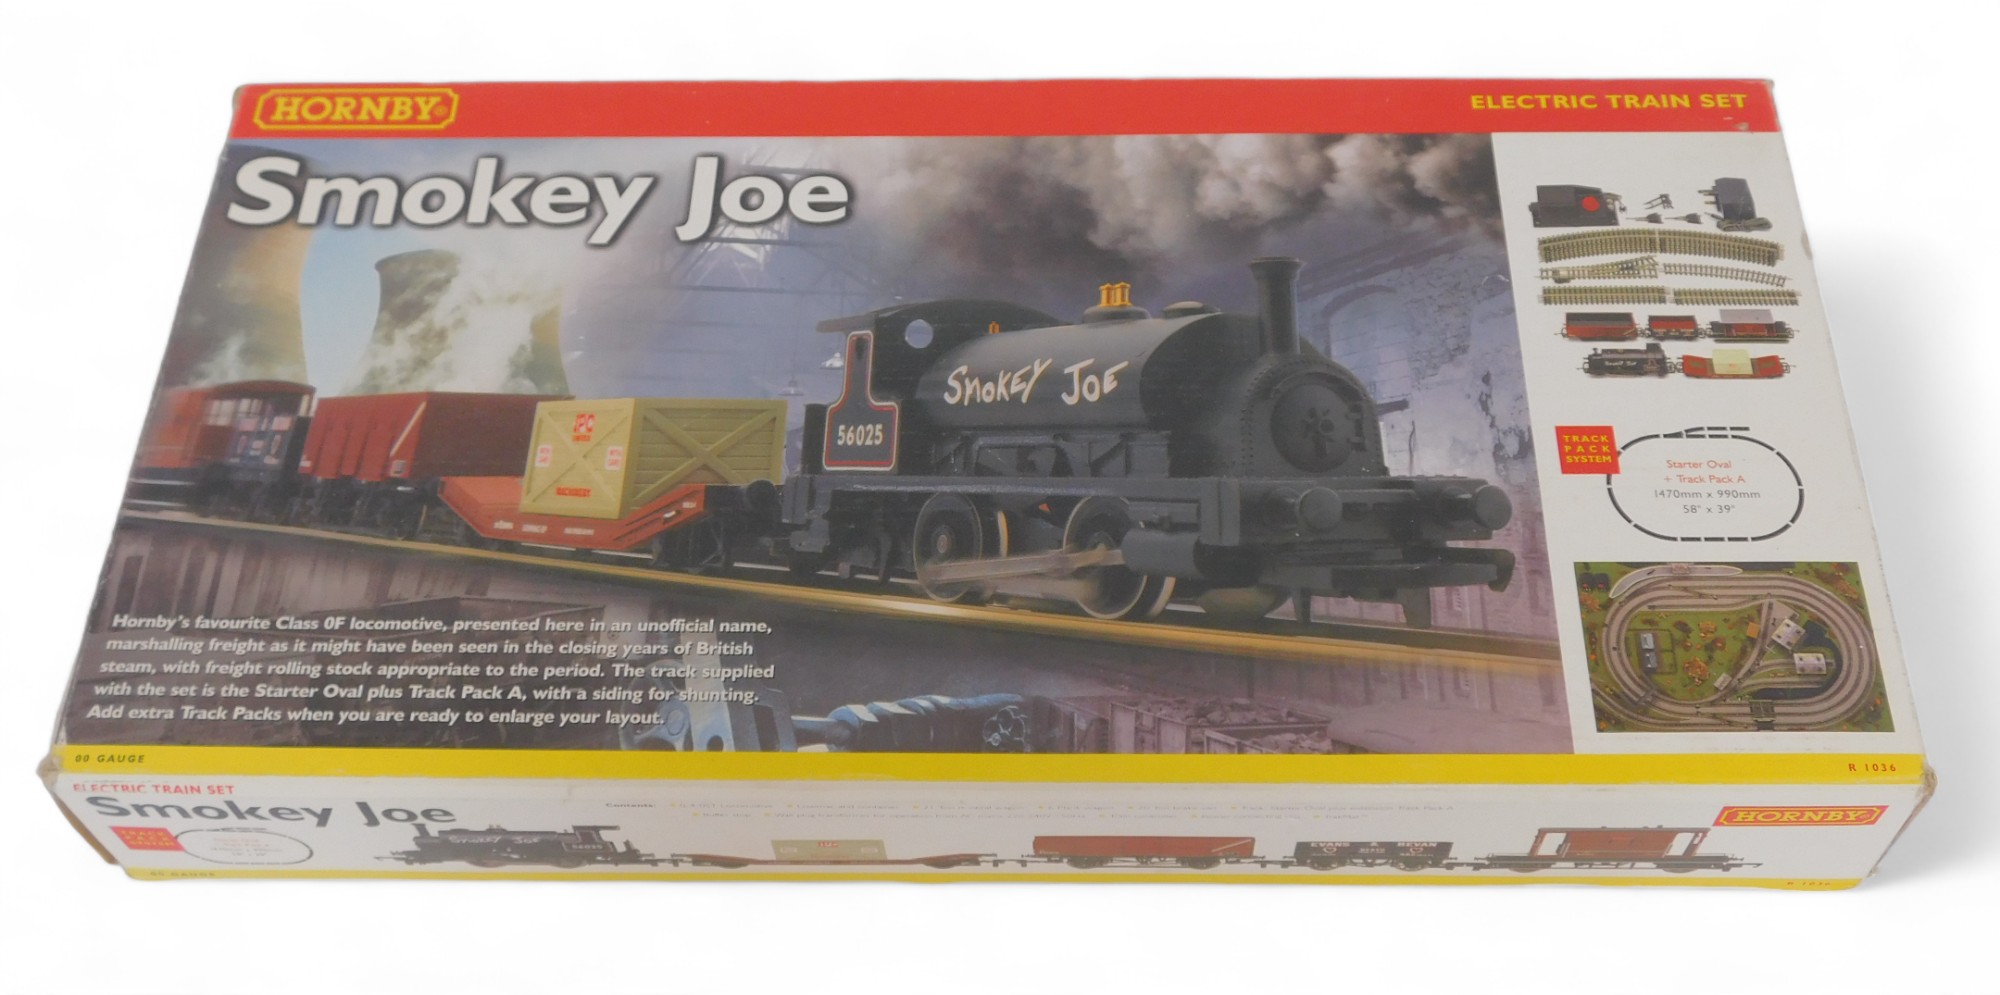 A Hornby train set 1036 Smokey Joe, boxed.